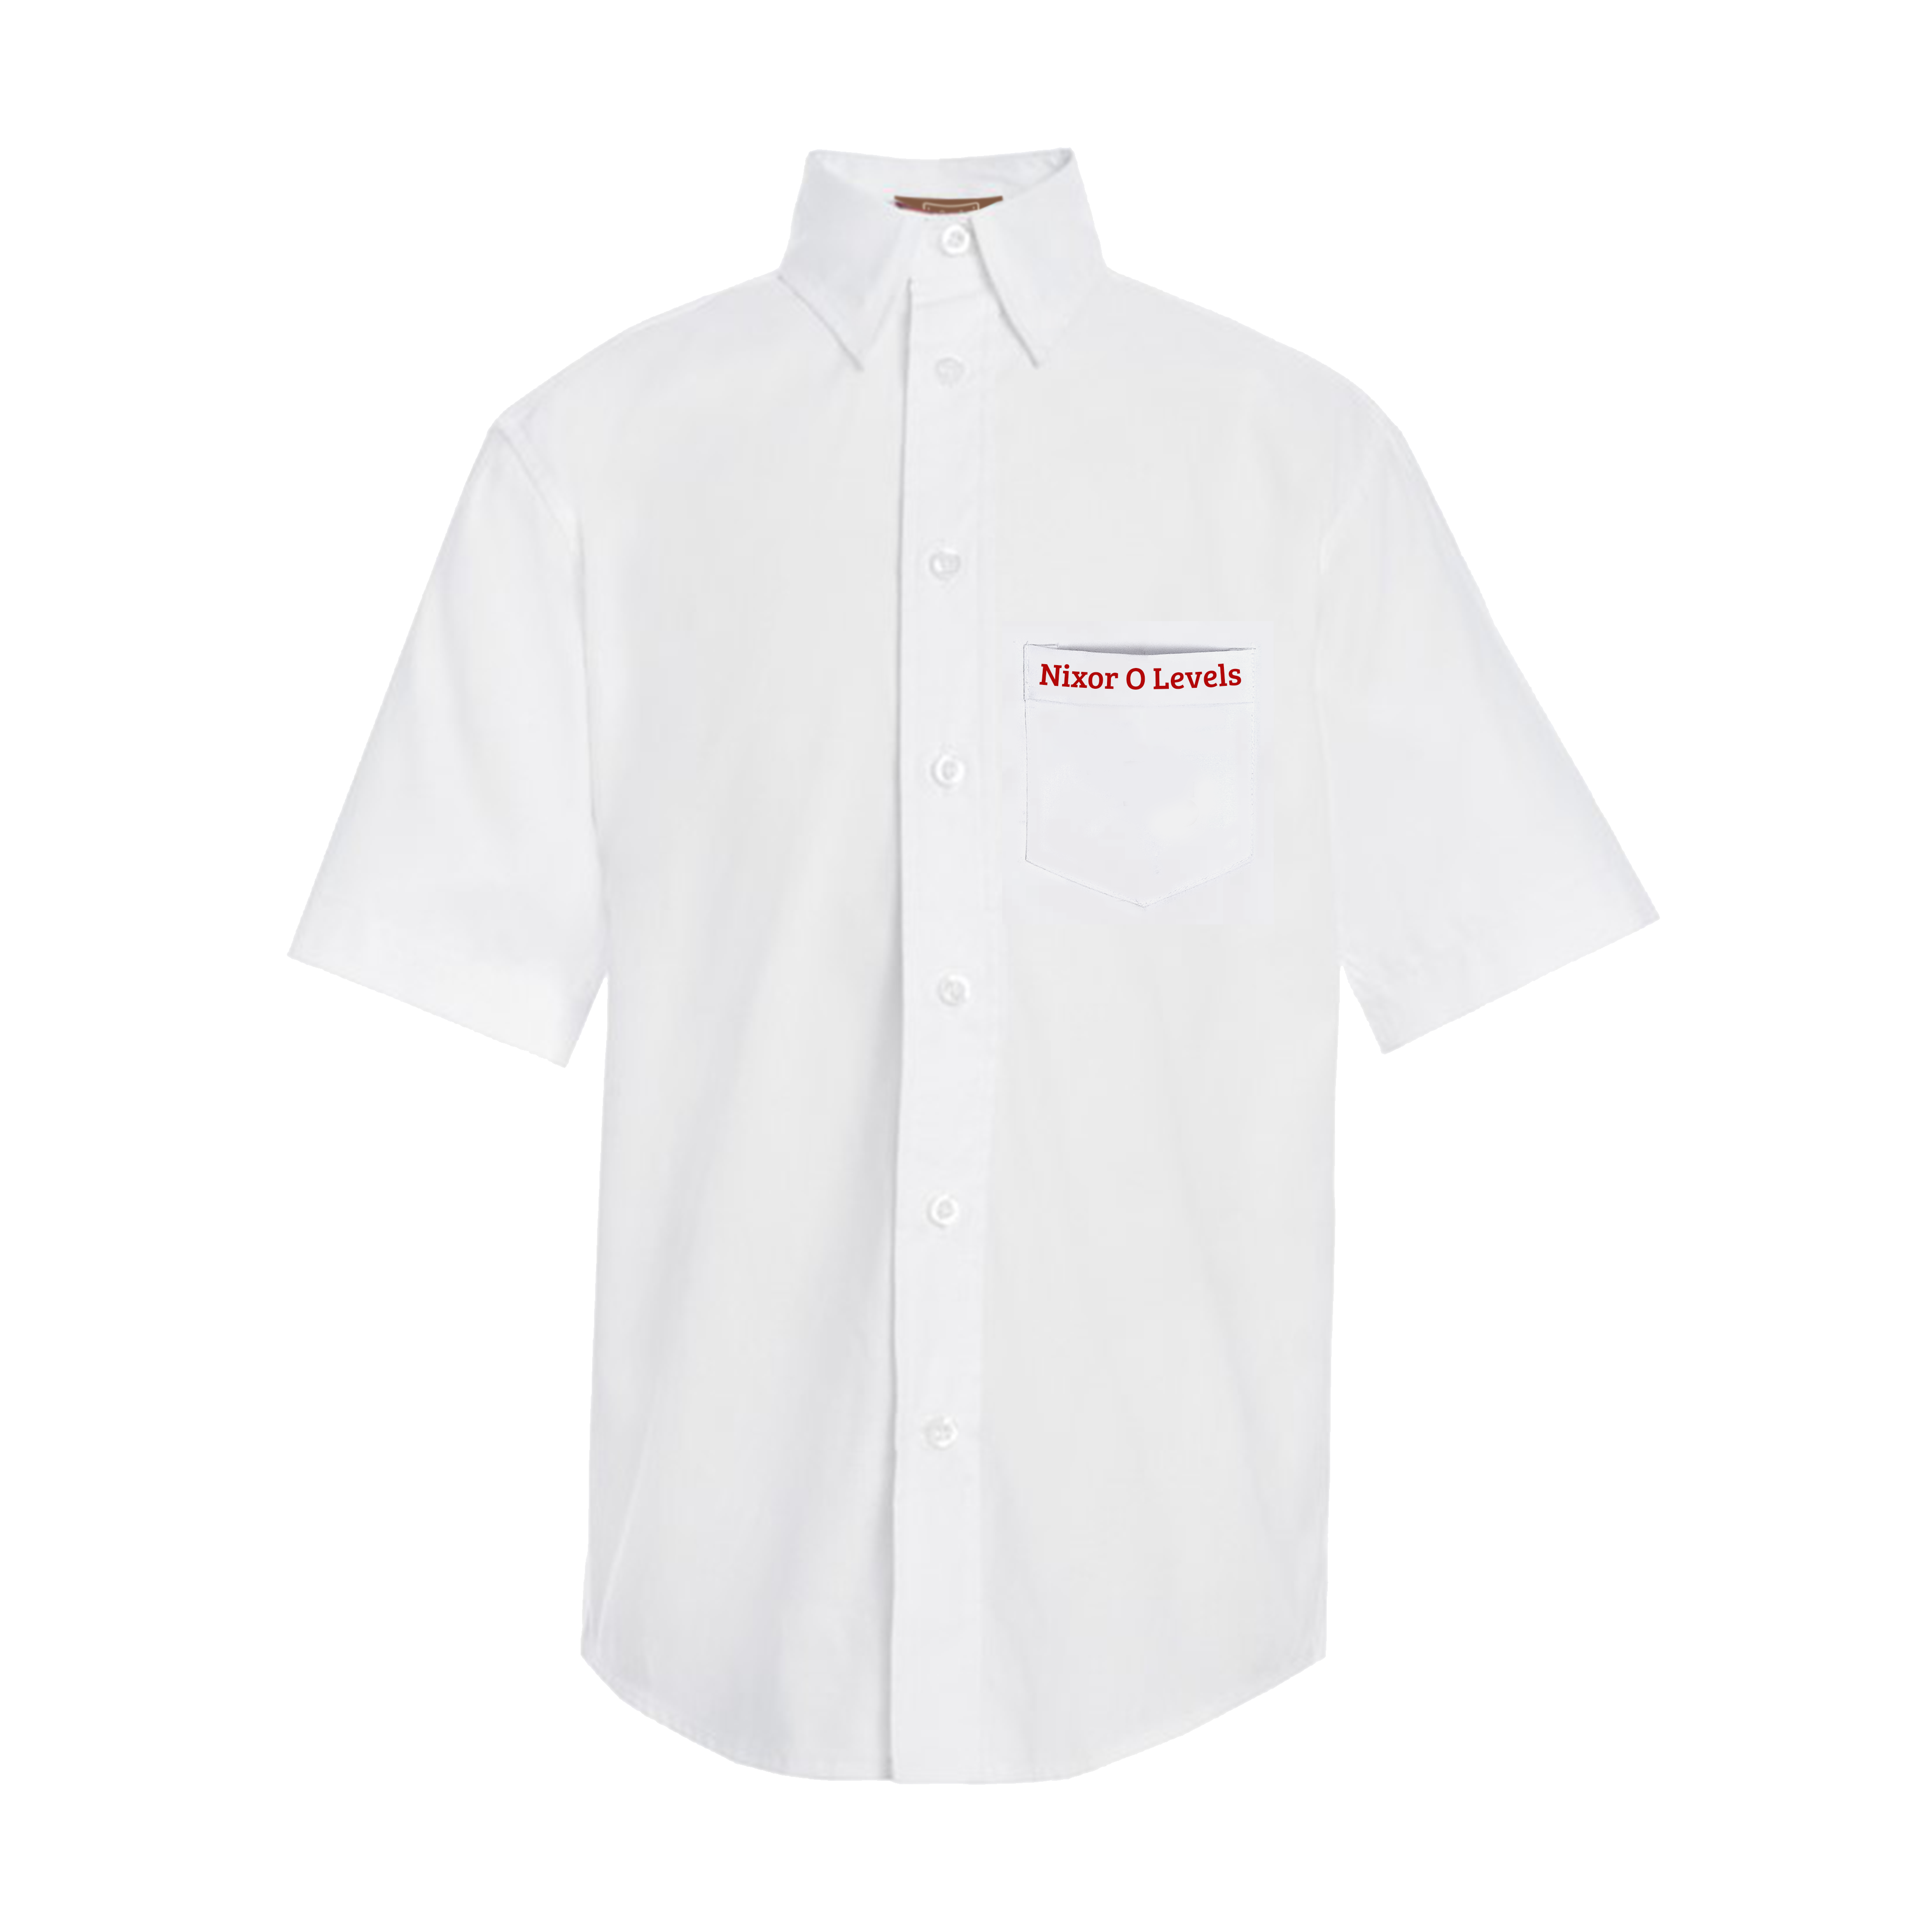 Nixor O Levels H/S Shirt - Youniform